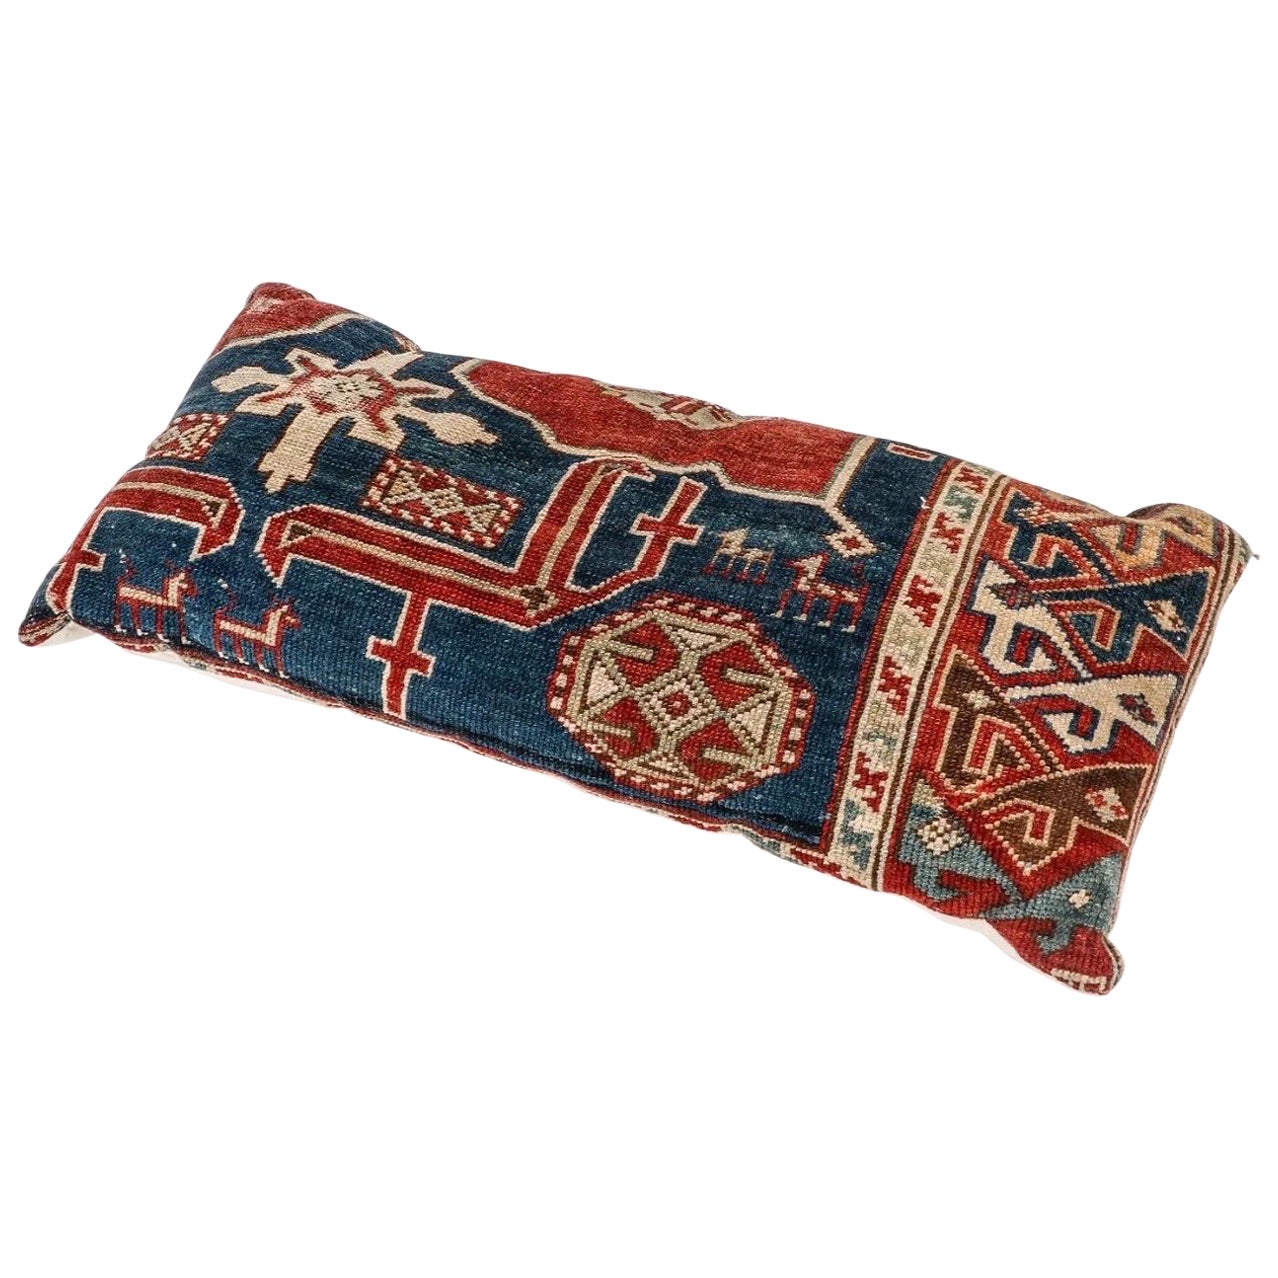 Vintage Persian Tribal Rug Lumbar Pillow 17 x 7 inches